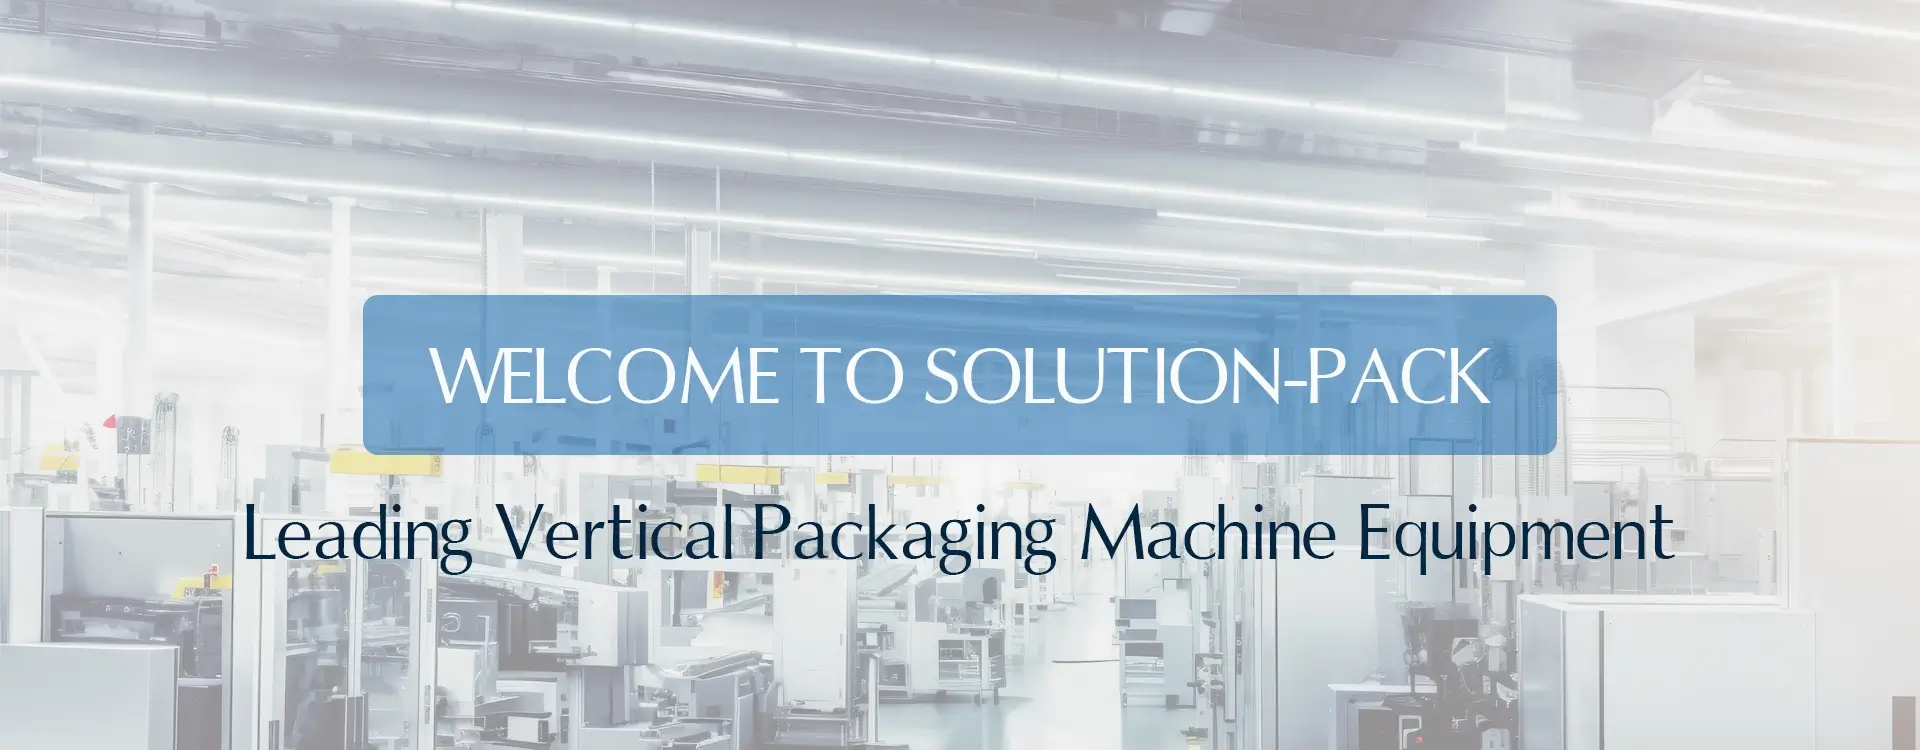 Model VSP630L Automatic Vertical Packaging Machine Unit | Solution-Pack (Middle Banner)